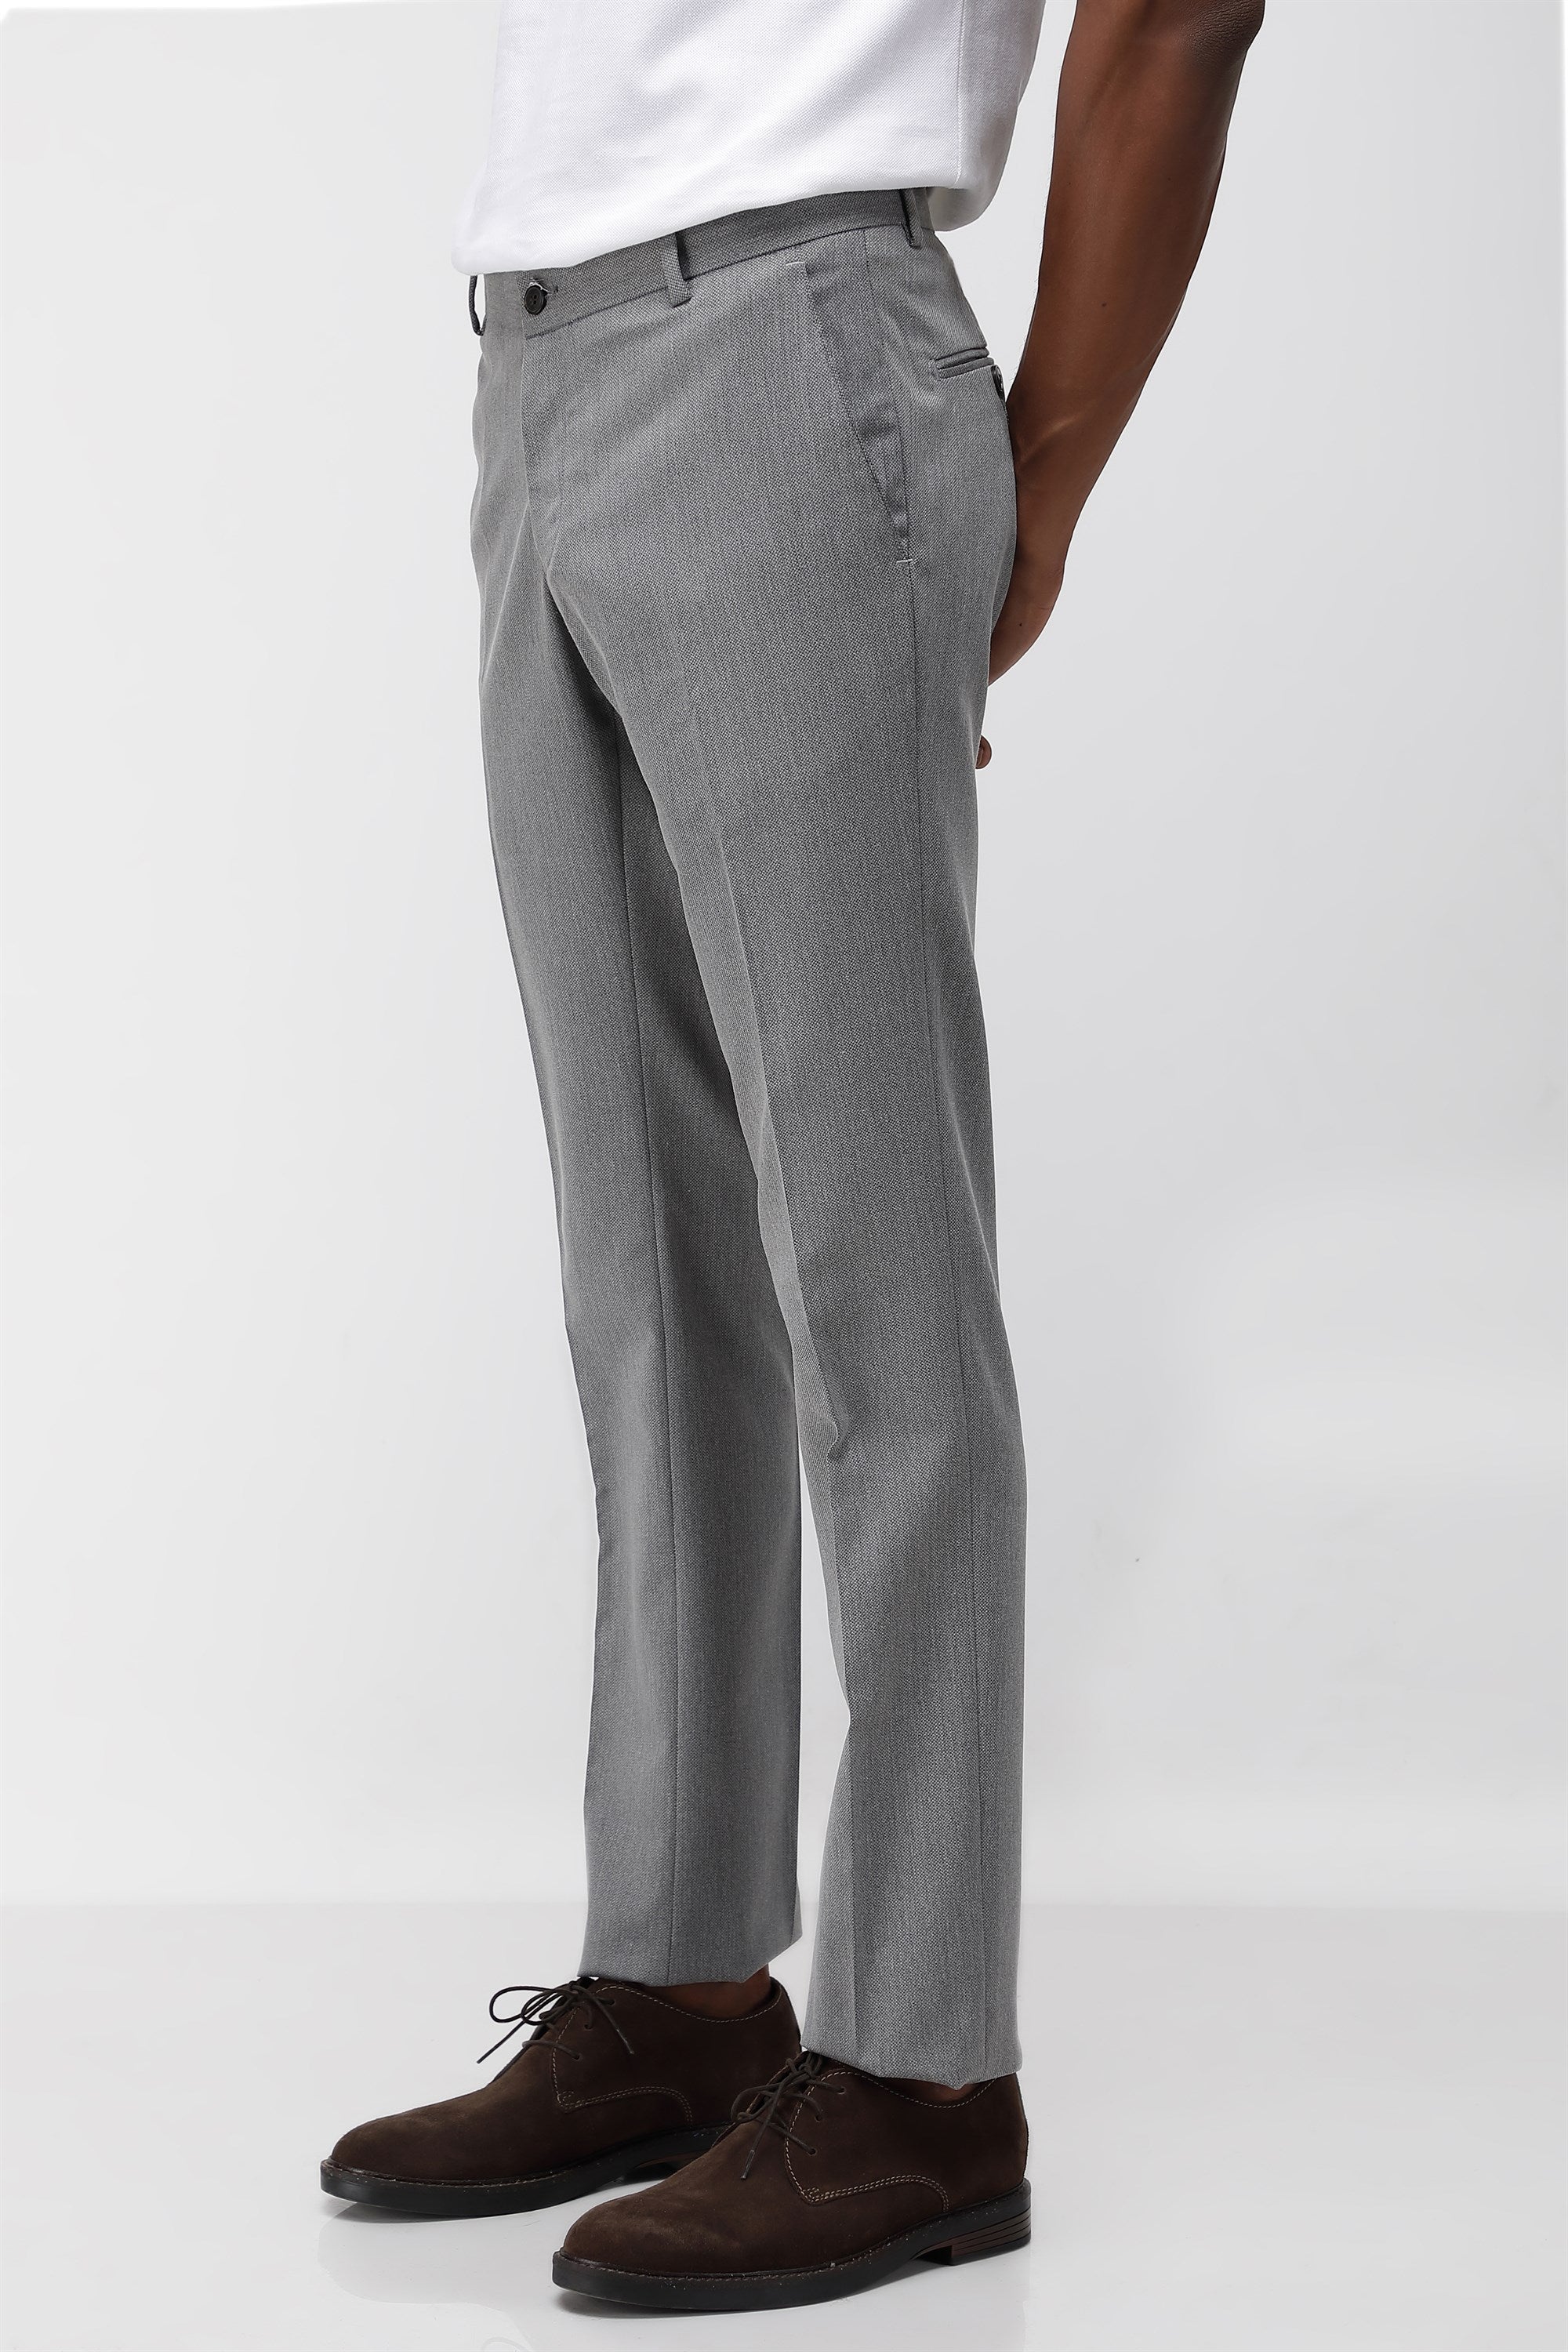 T the brand Men Formal Flat Front Crease Trouser - Light Grey